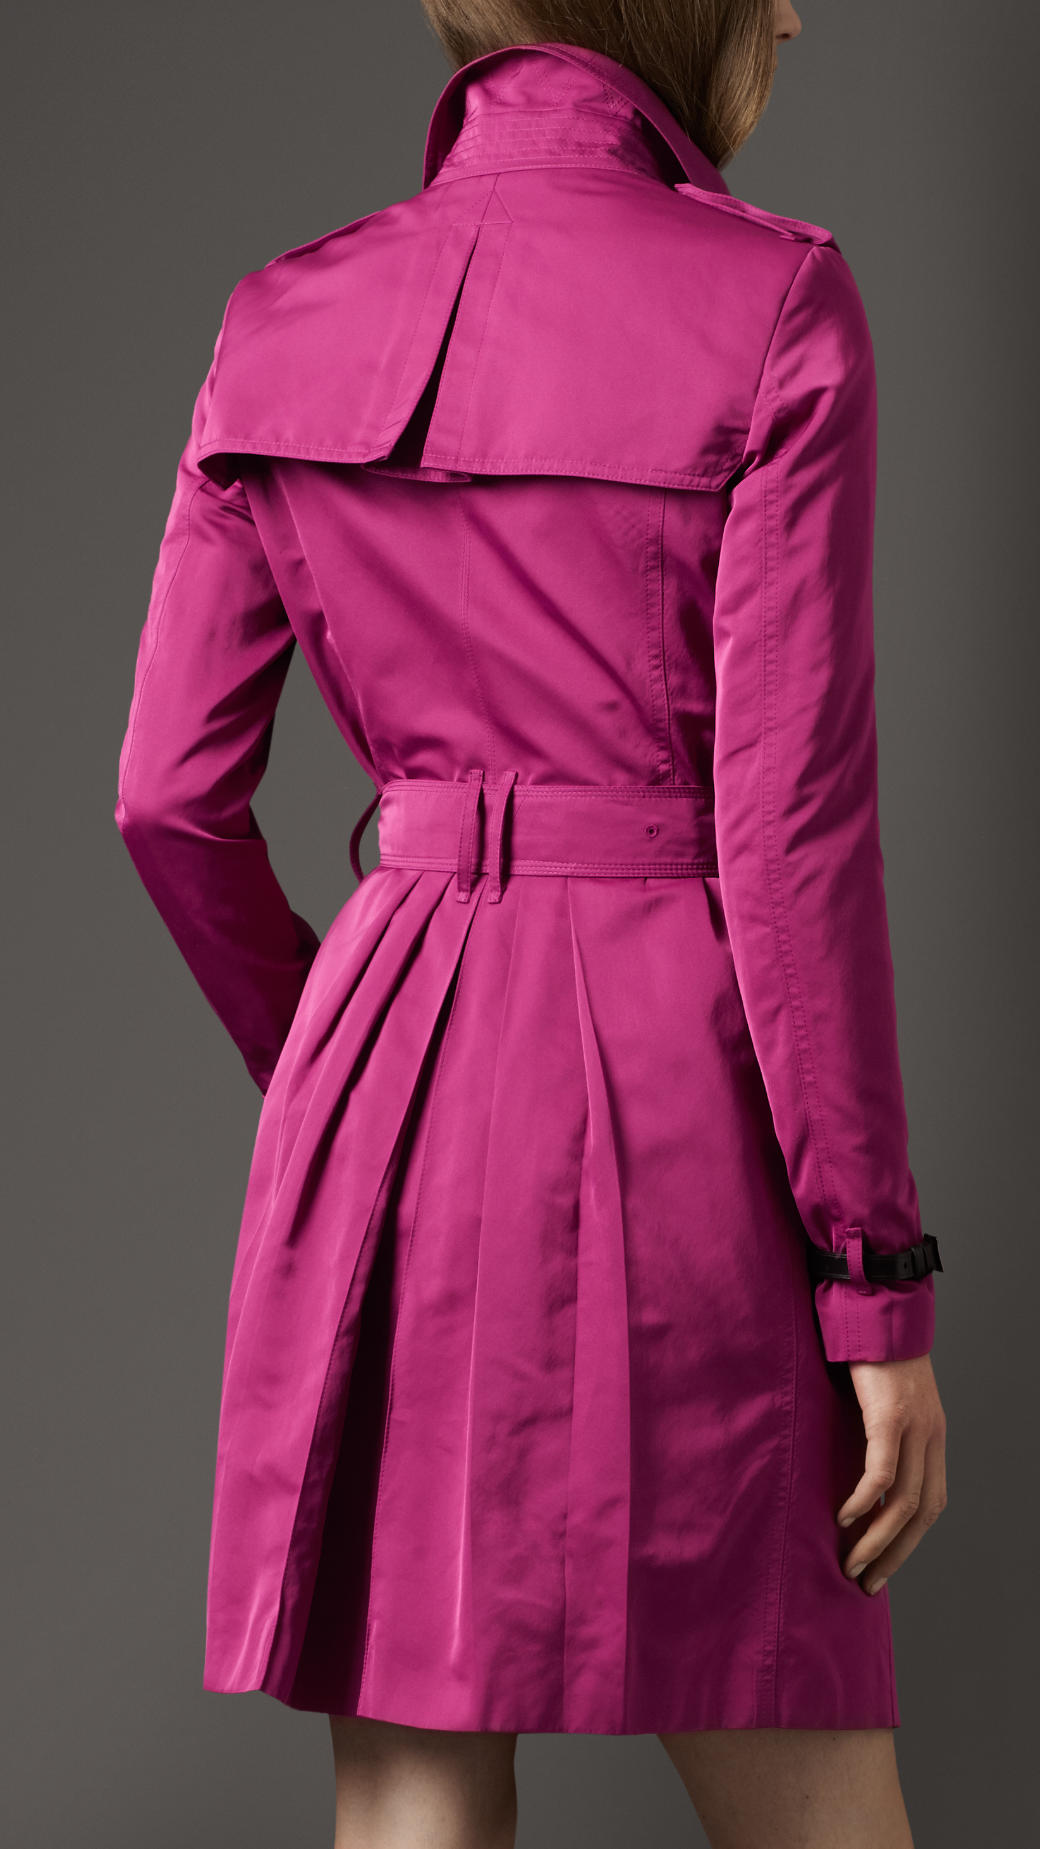 Burberry Long Pleat Detail Trench Coat in Purple - Lyst